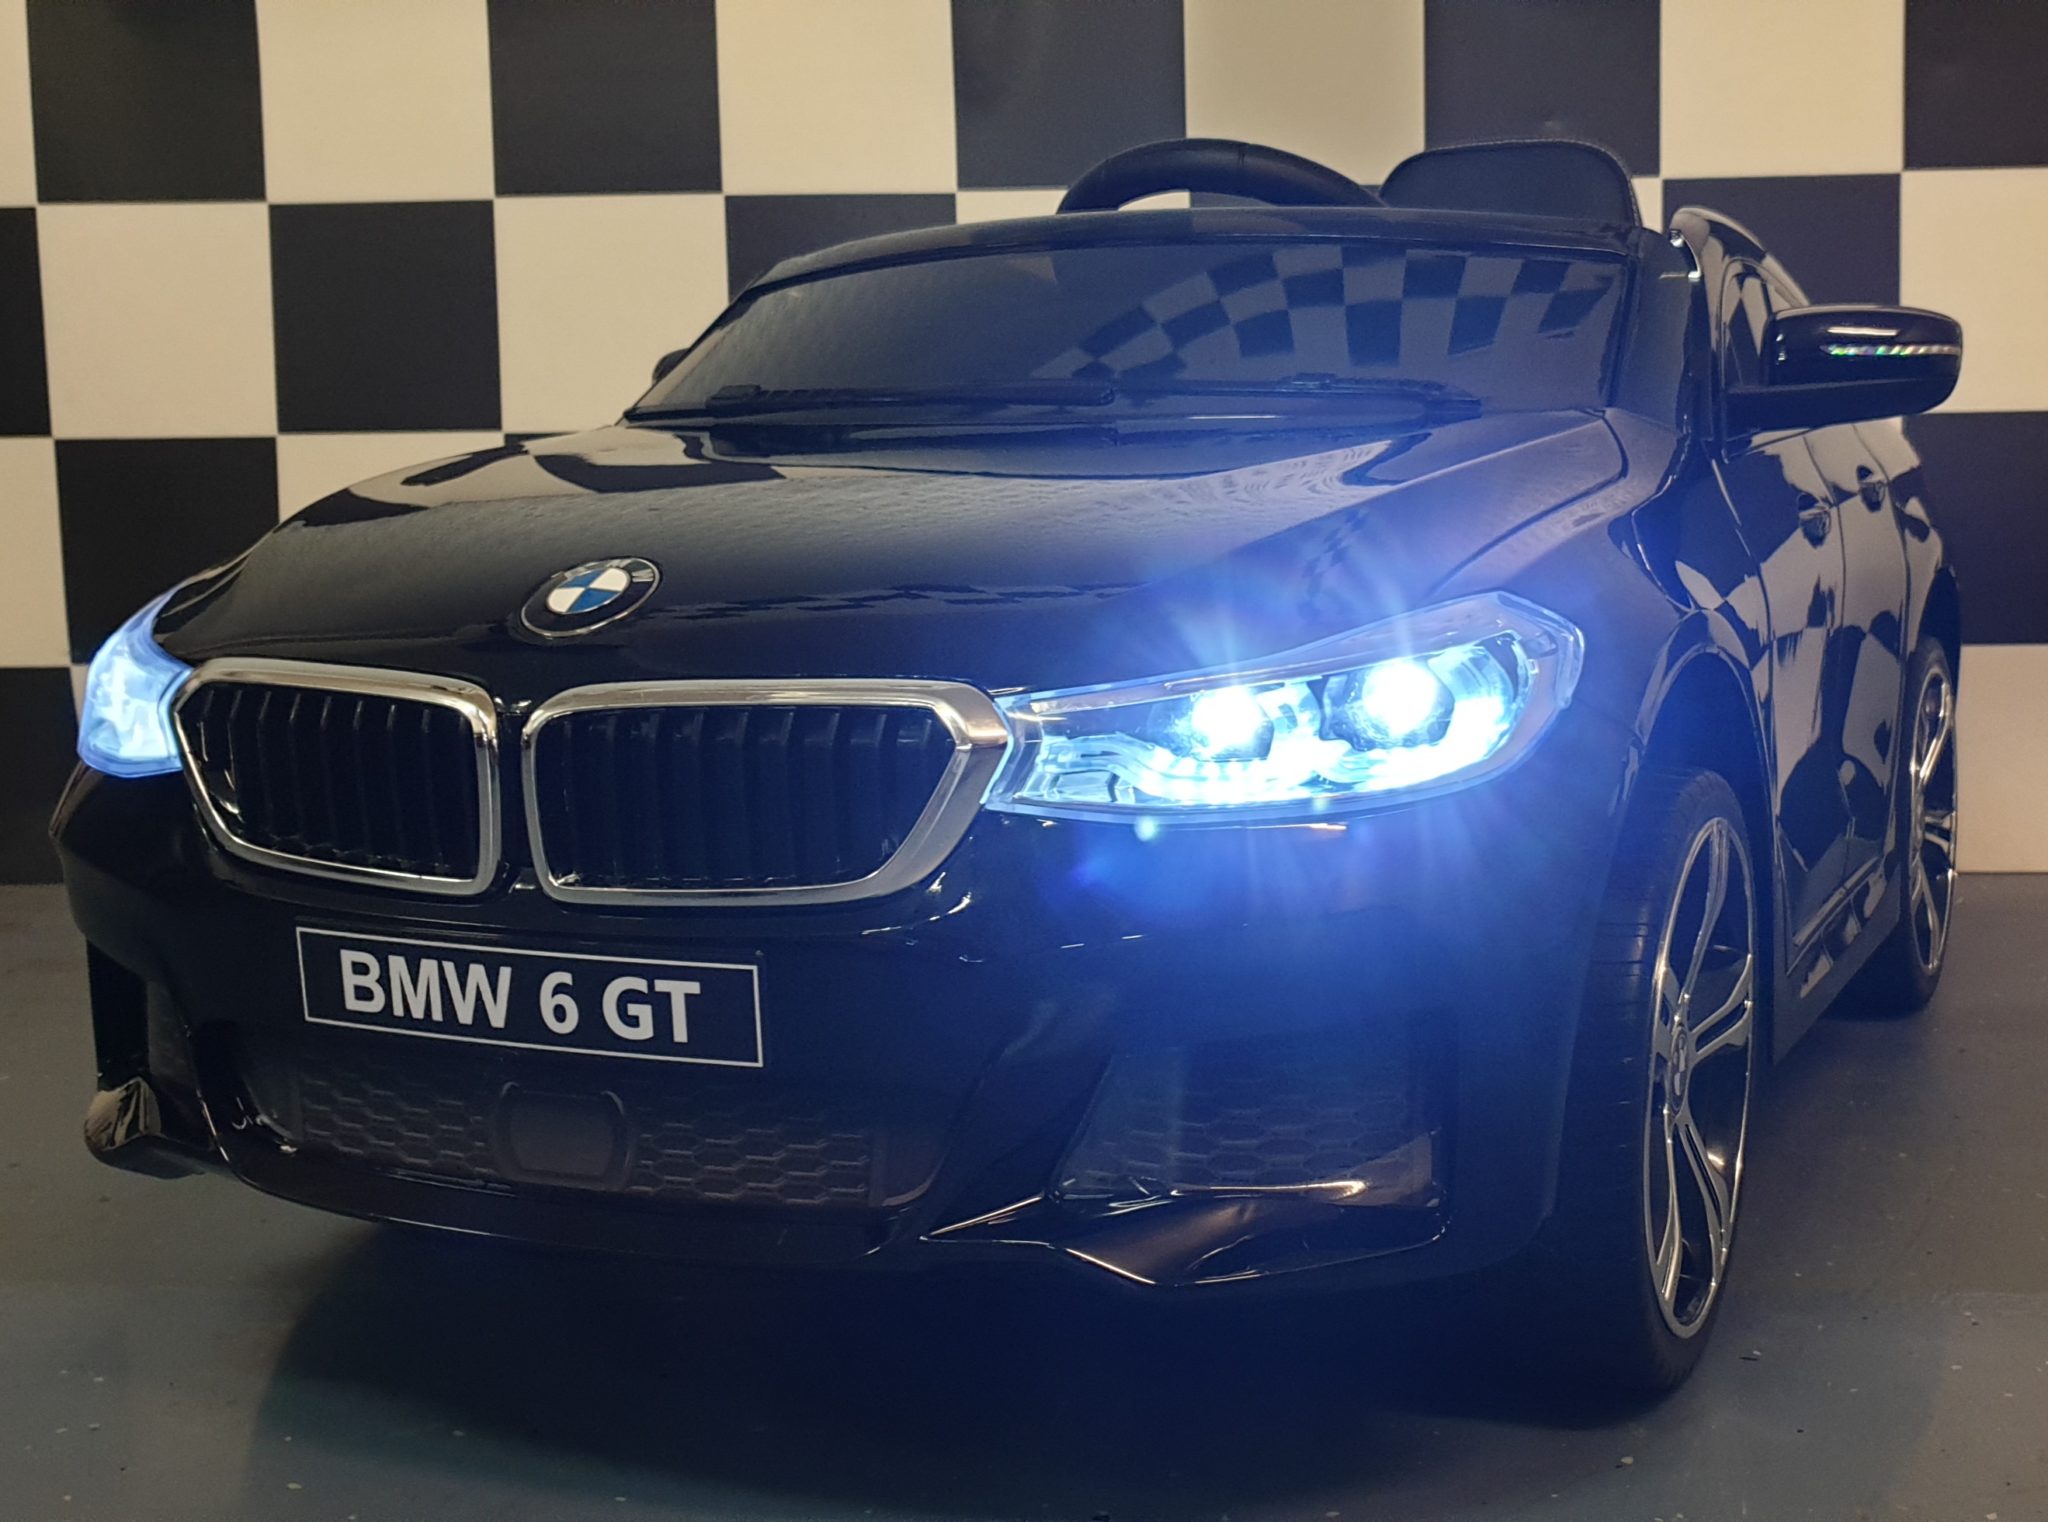 overdrijven Perth hypotheek BMW GT| METALLIC-ZWART | 12V | 2.4G RC - Kids-Accu Cars